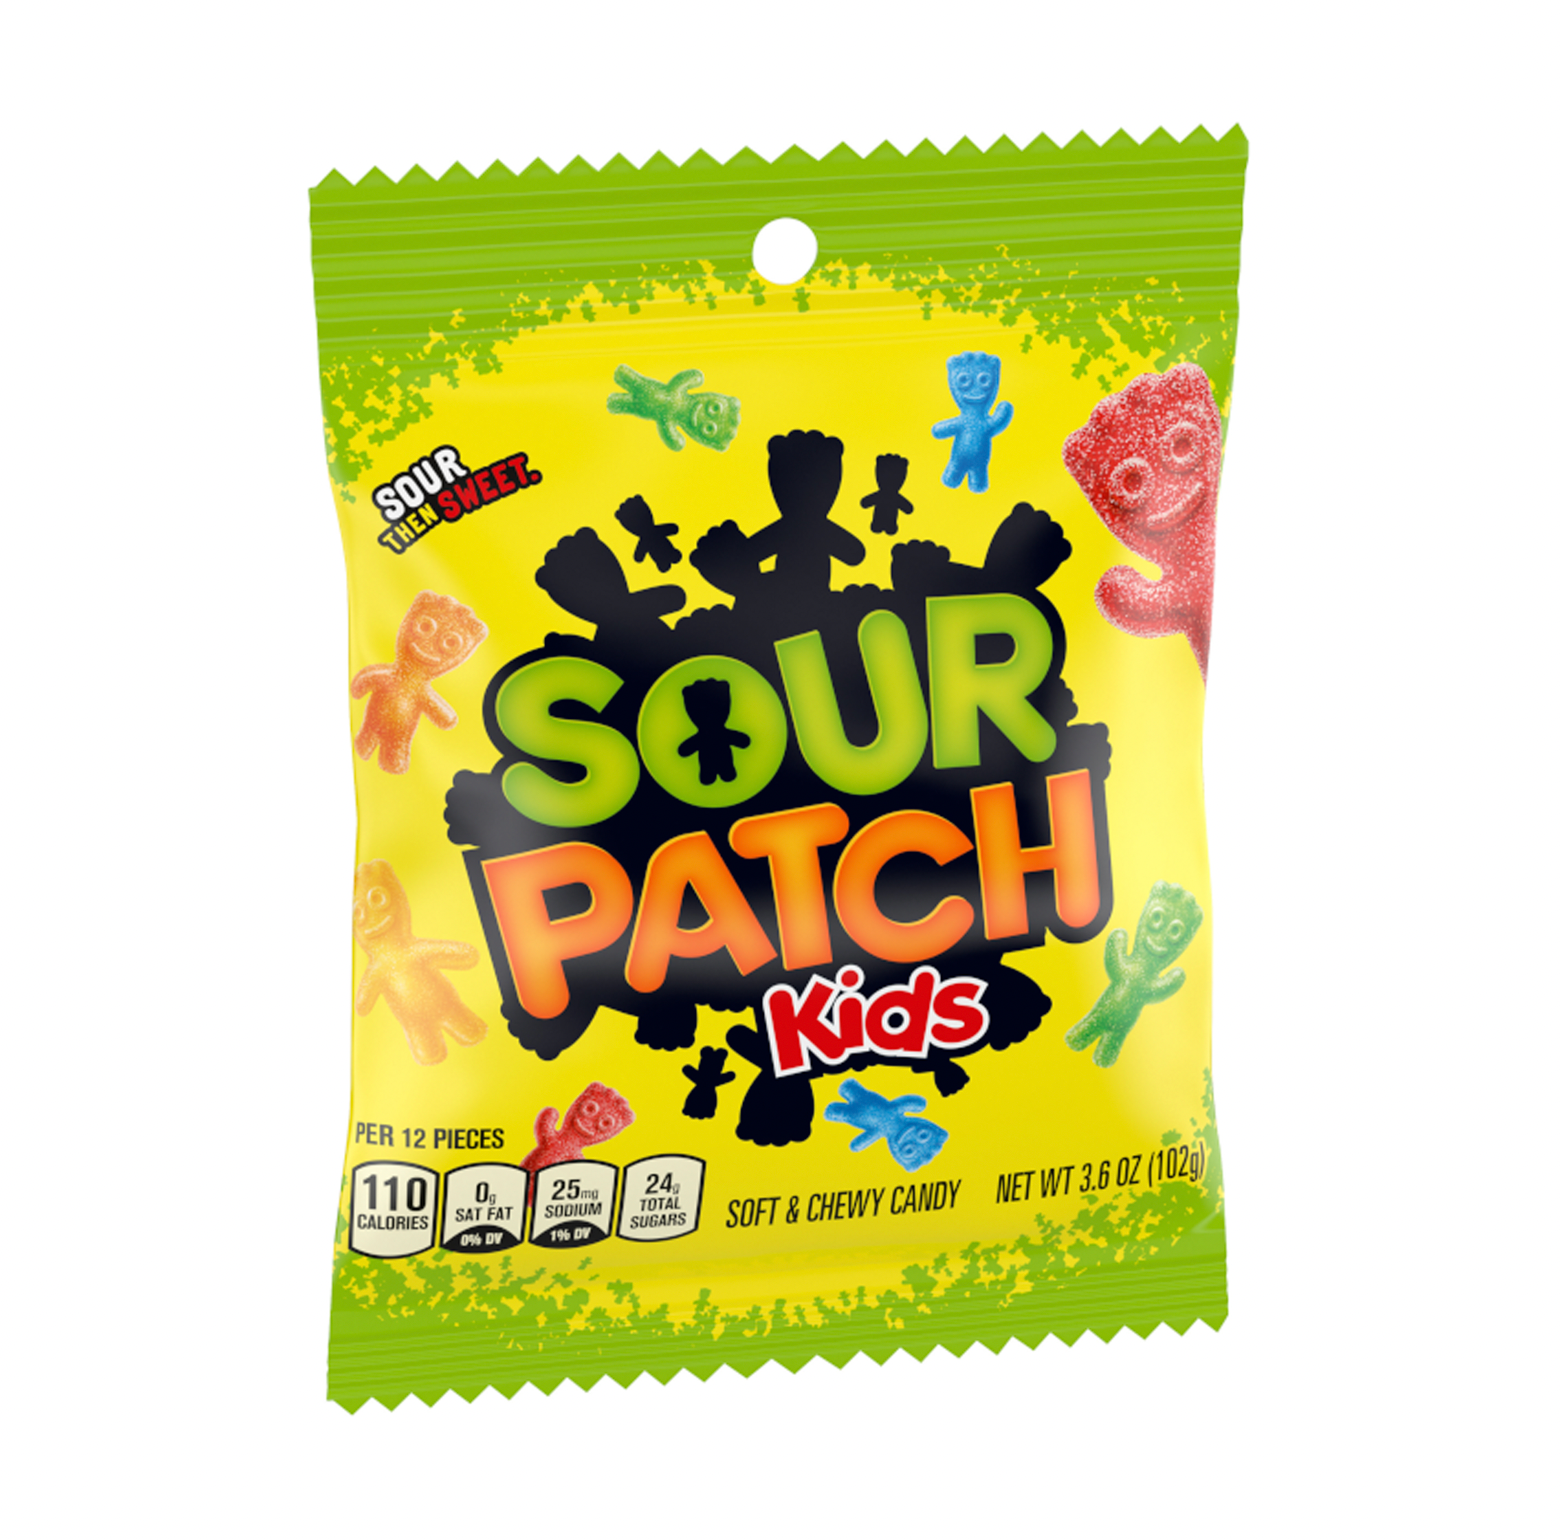 SOUR PATCH KIDS Blue Raspberry Soft & Chewy Candy, 3.6 oz